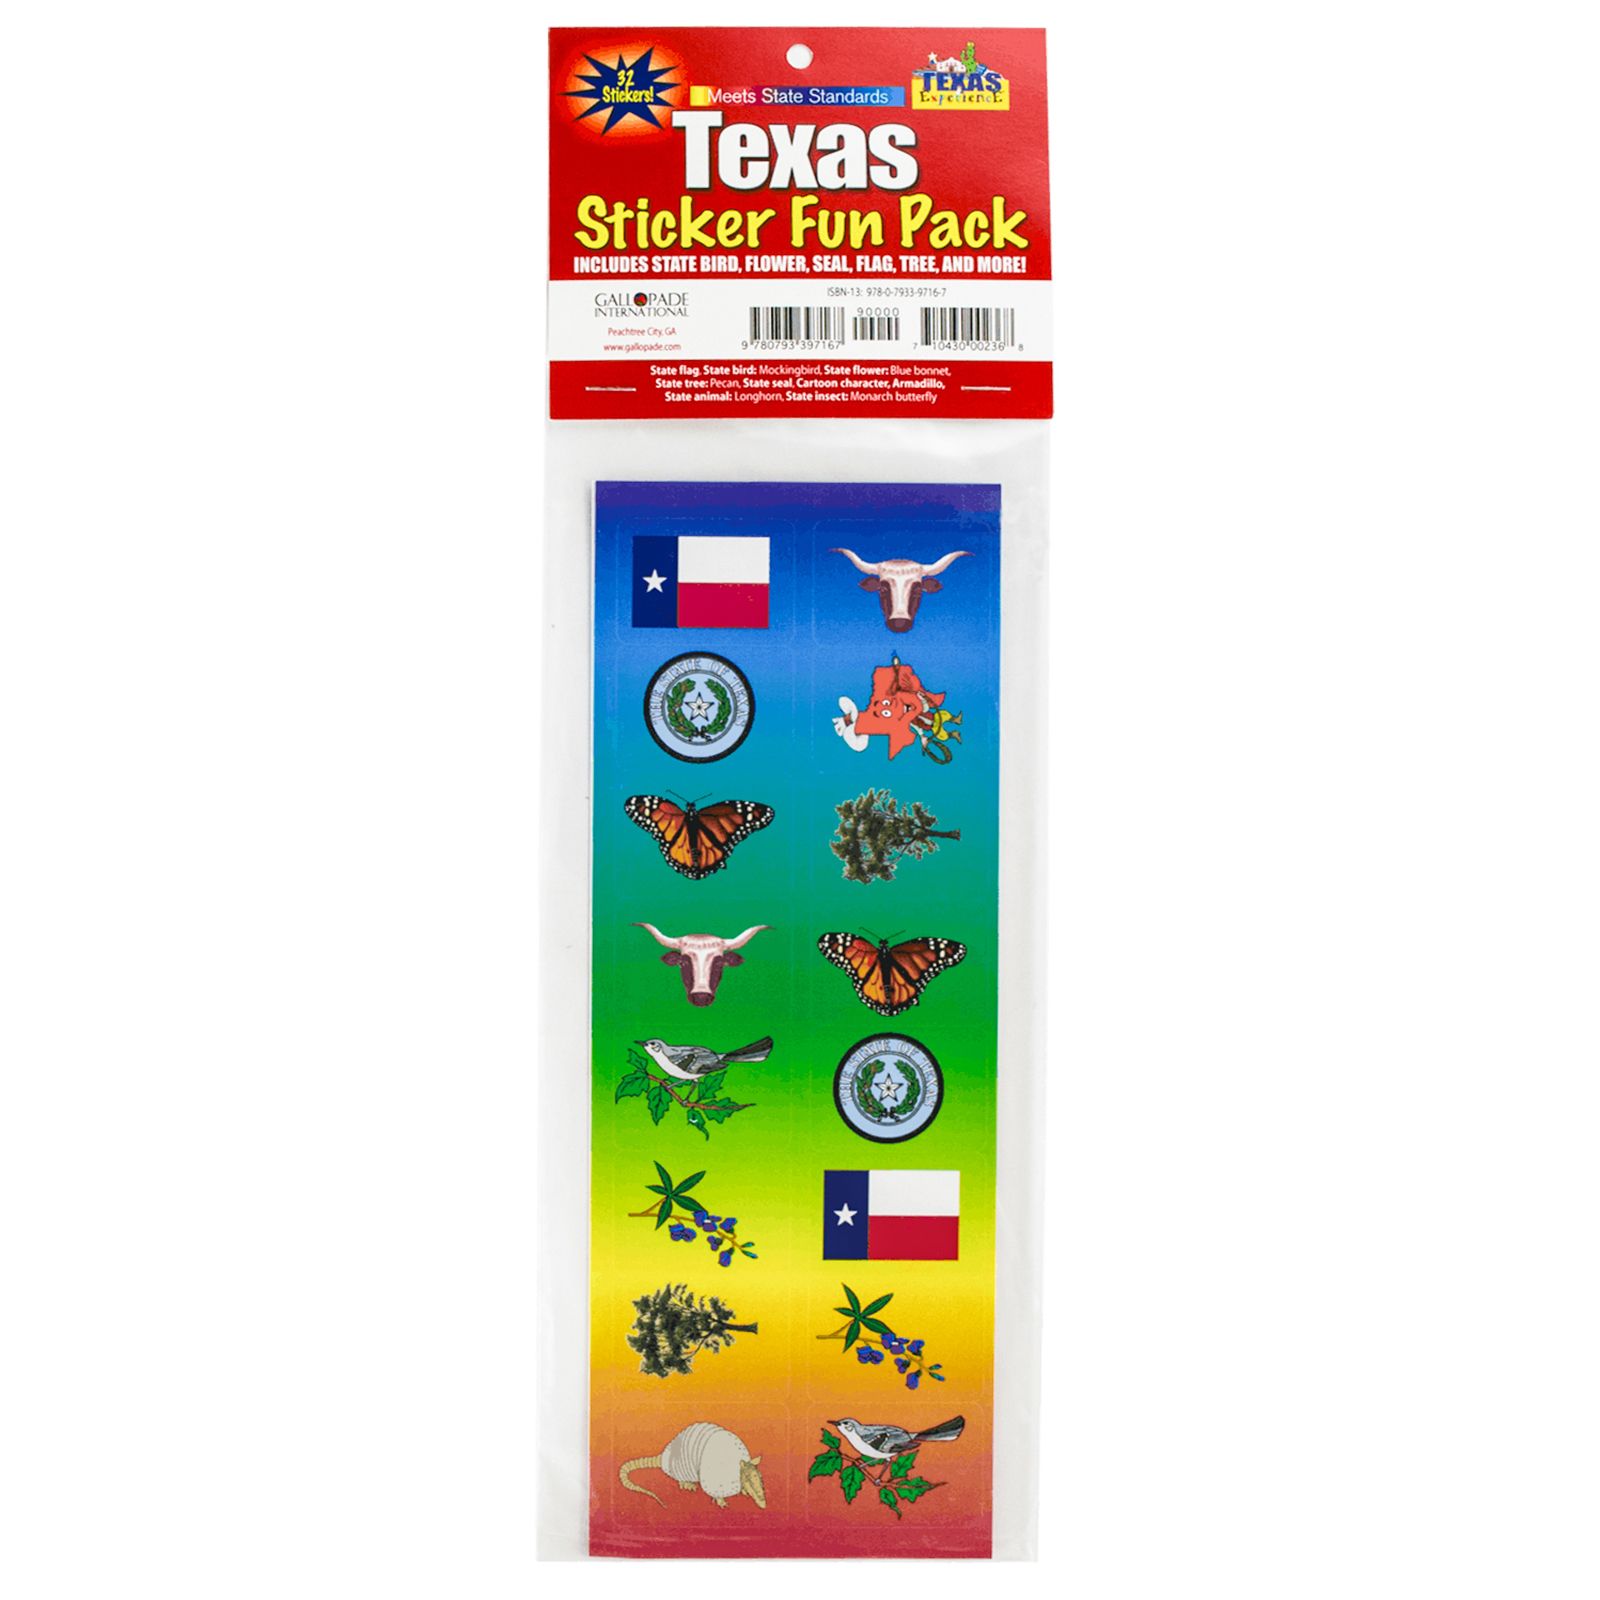 Texas Sticker Fun Pack Texas Capitol Gift Shop